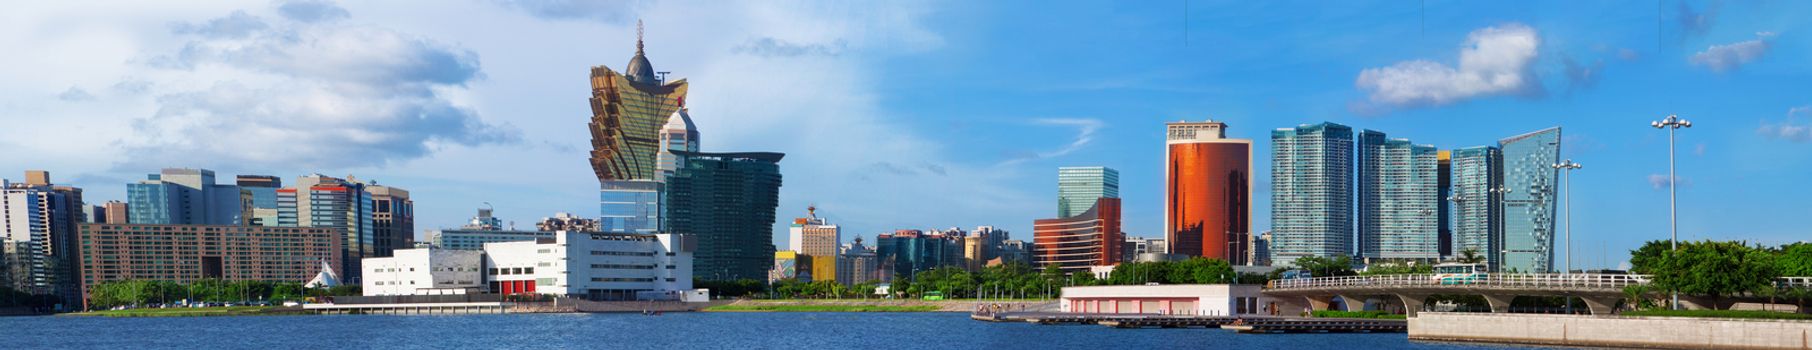 Macau city view 